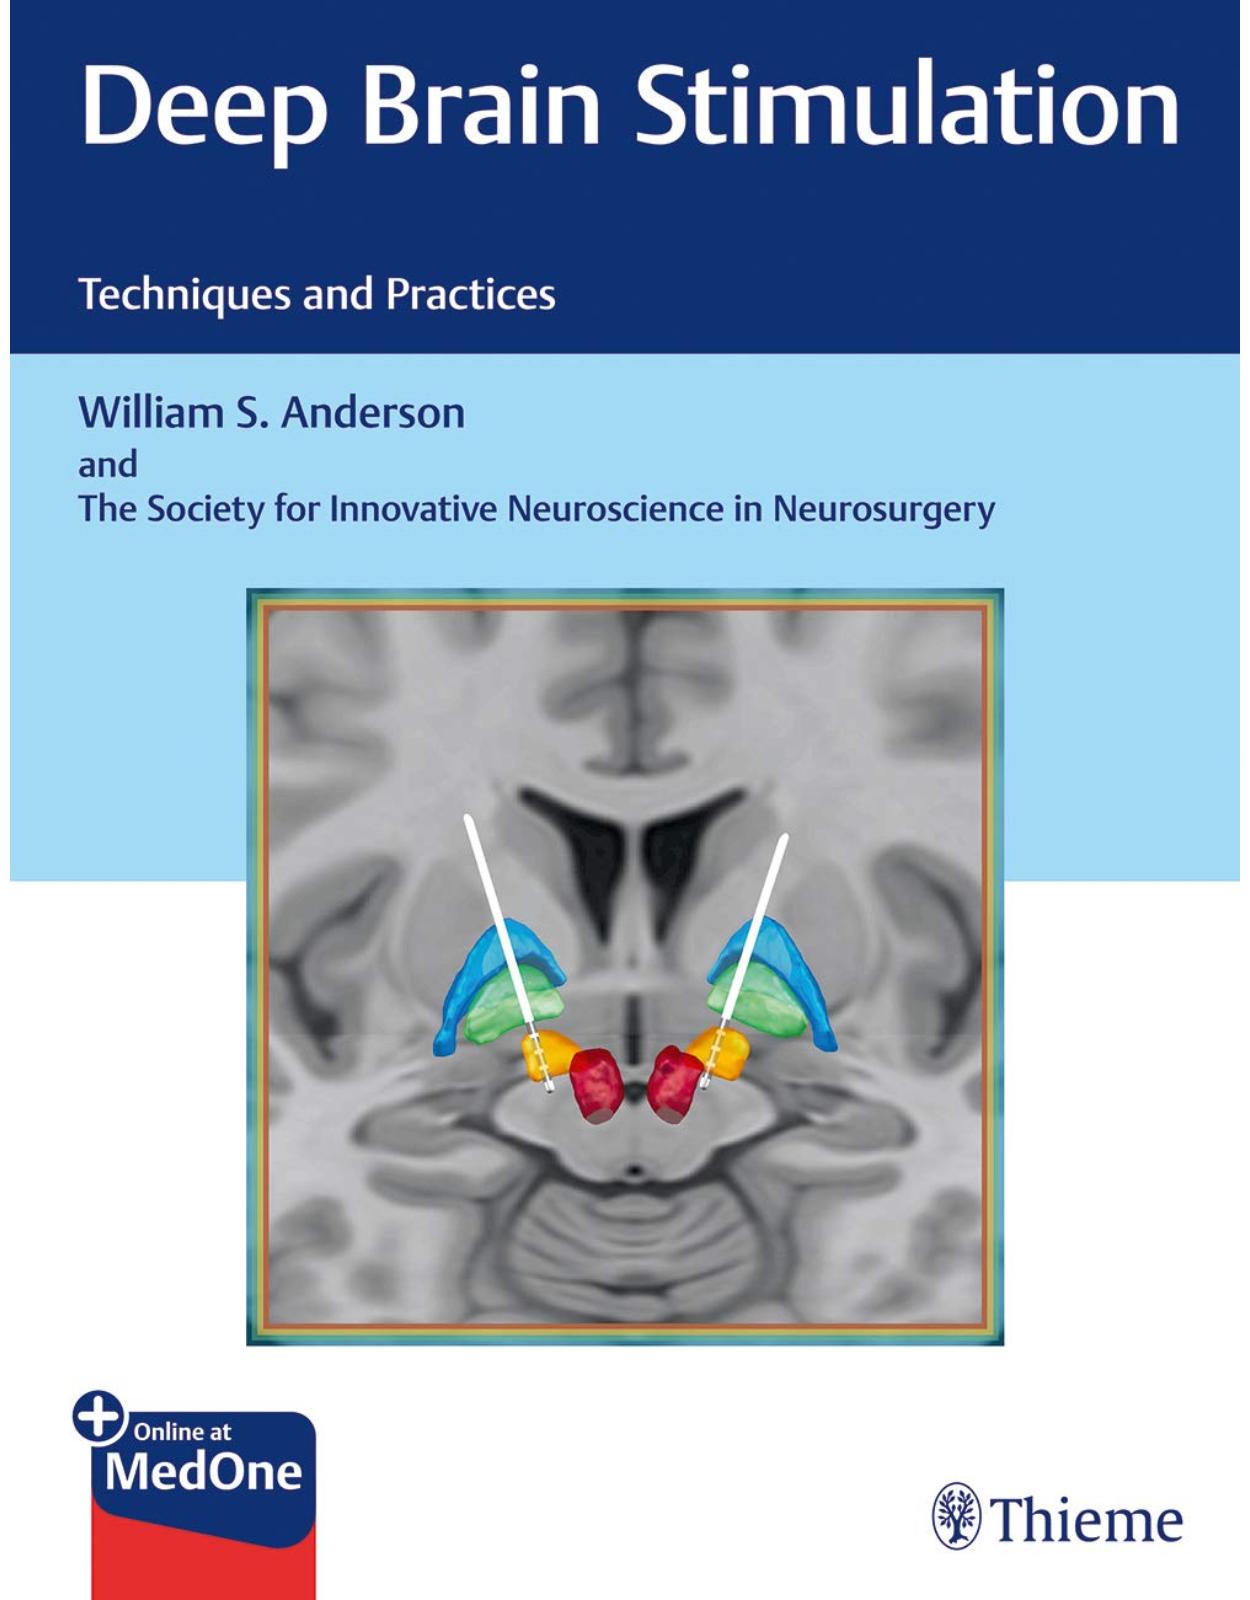 Deep Brain Stimulation: Techniques and Practices